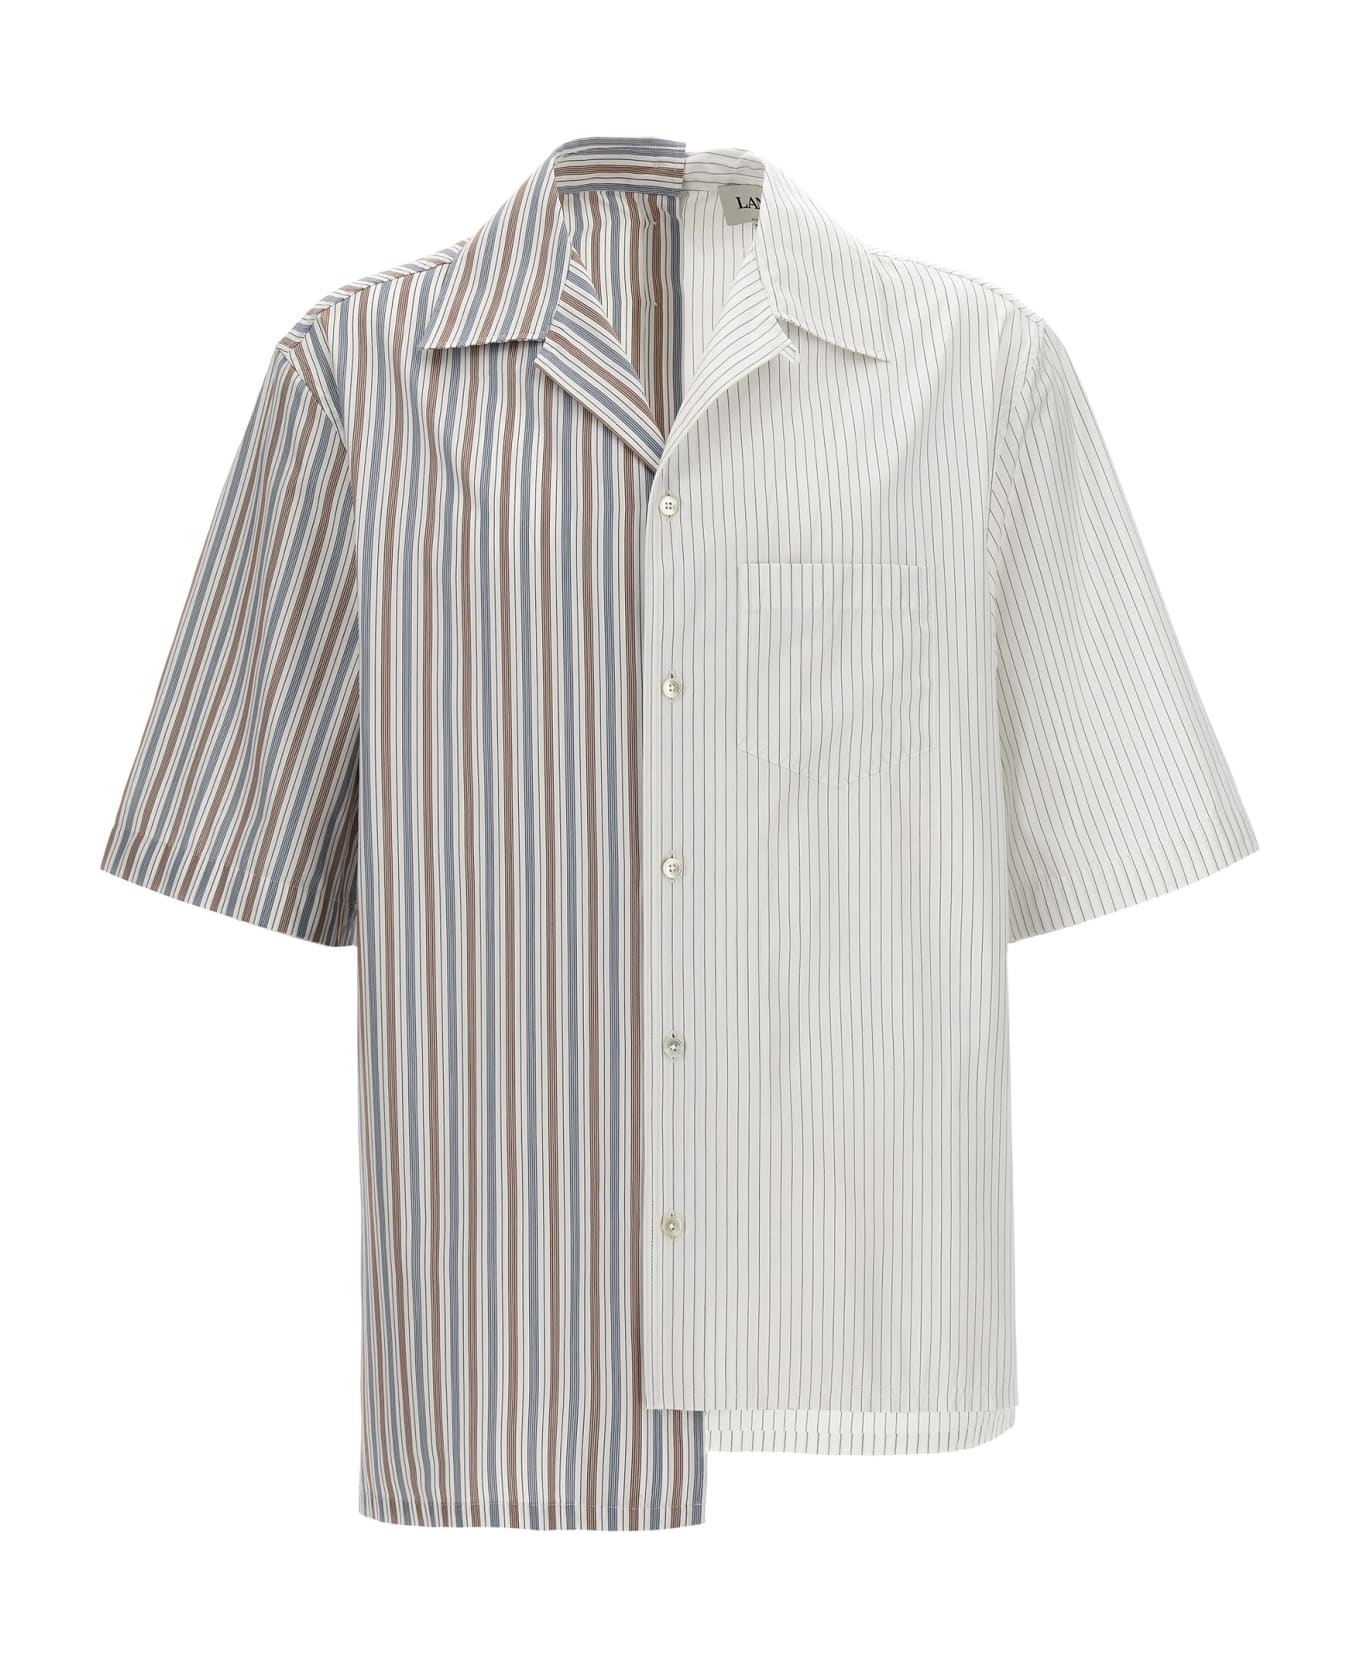 Lanvin Asymmetric Striped Shirt - Multicolor